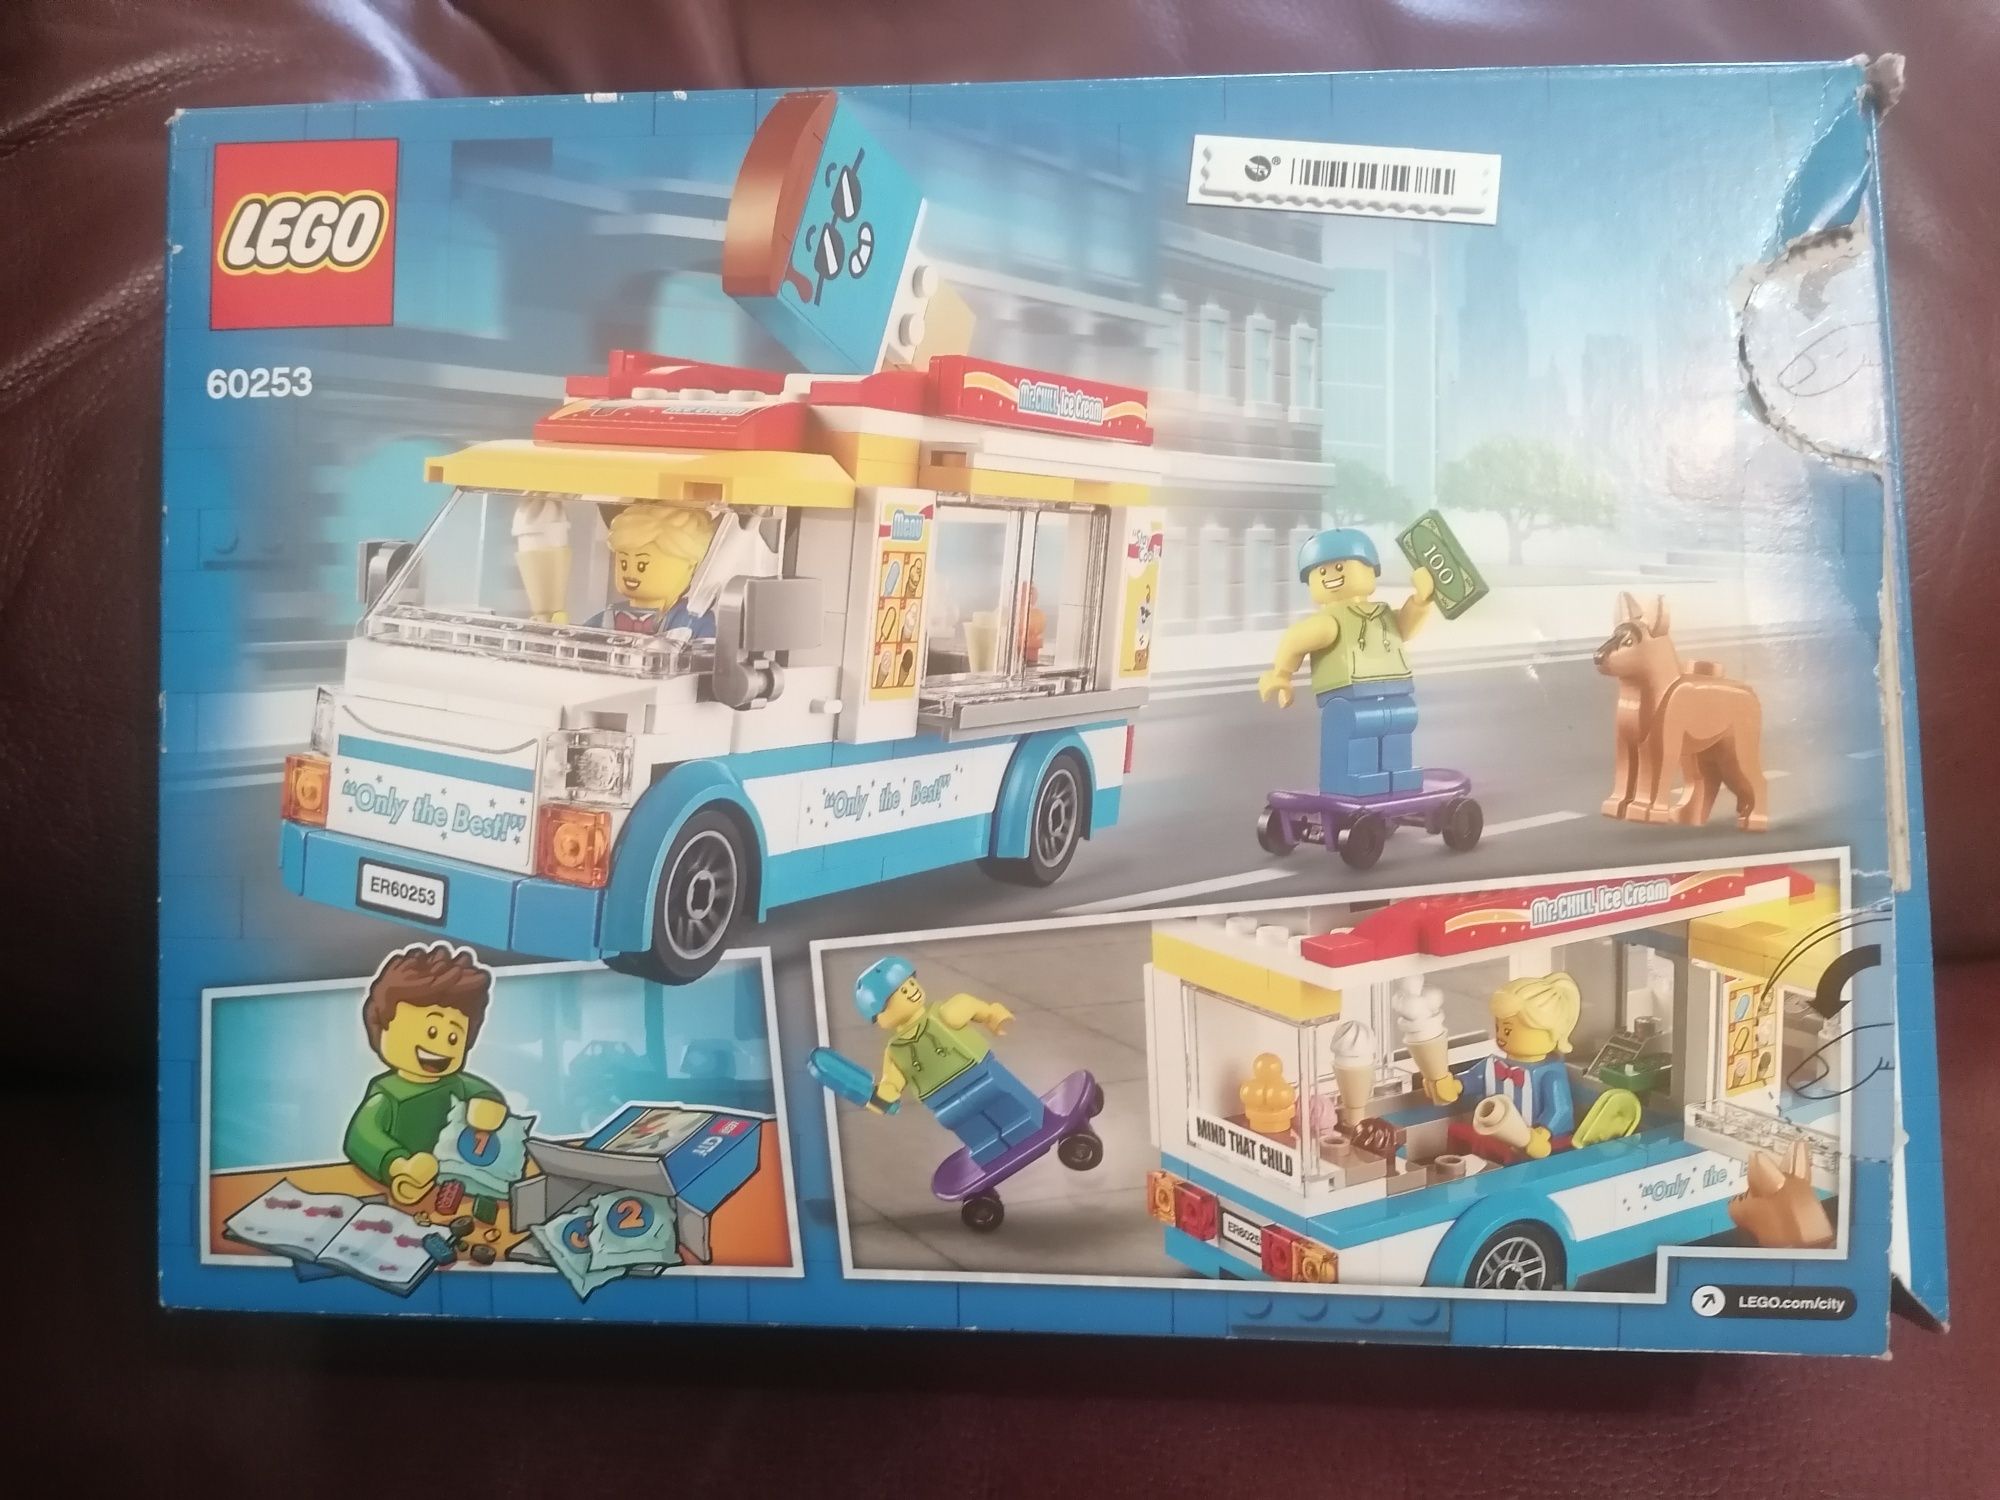 Lego City model 60253